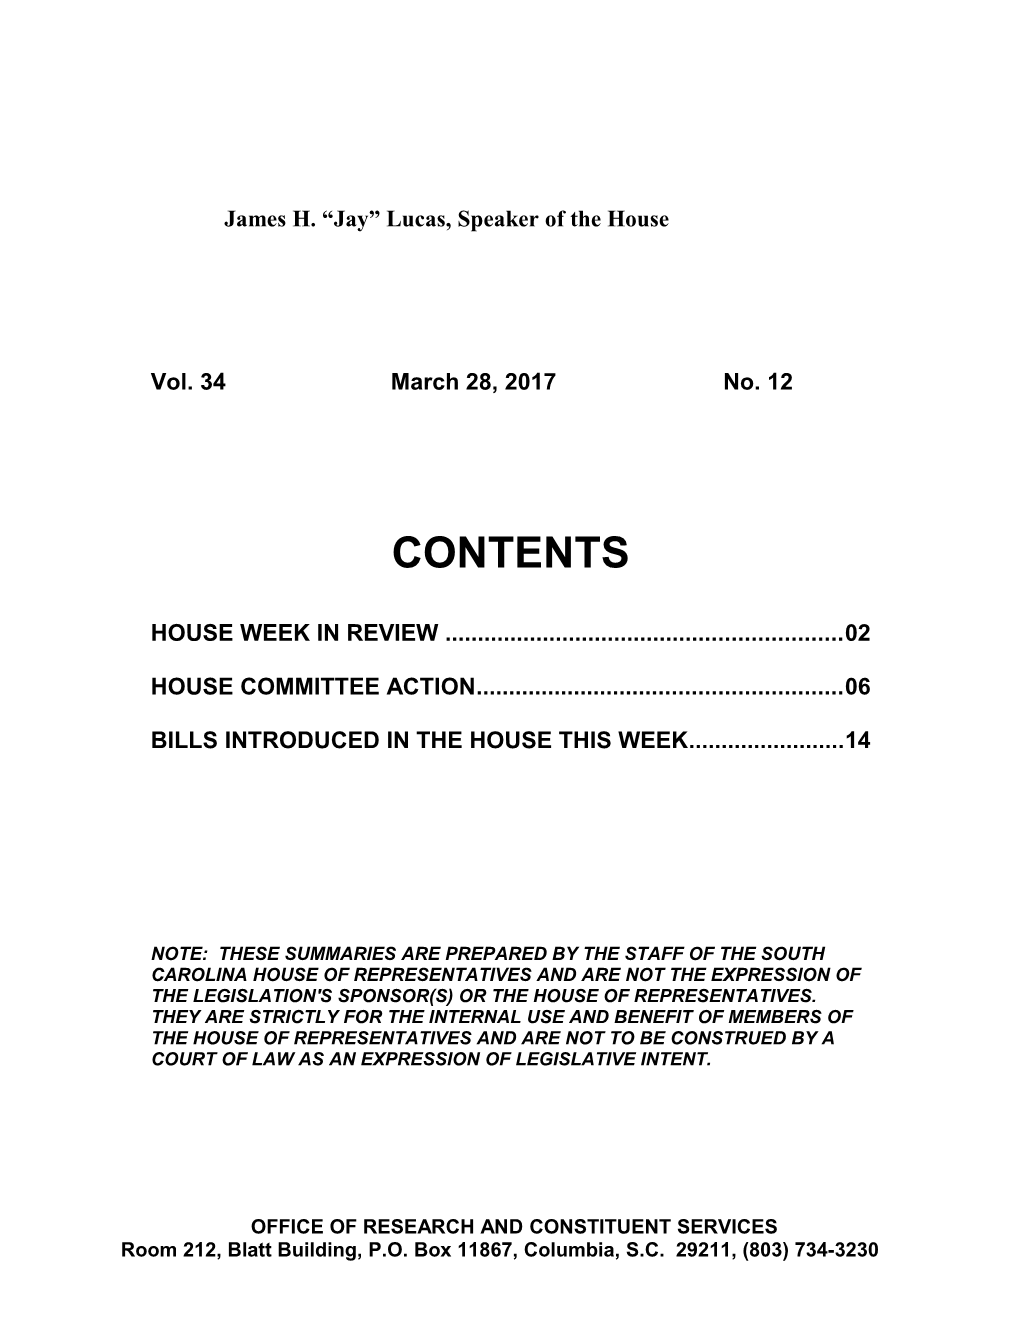 Legislative Update - Vol. 34 No. 12 March 28, 2017 - South Carolina Legislature Online